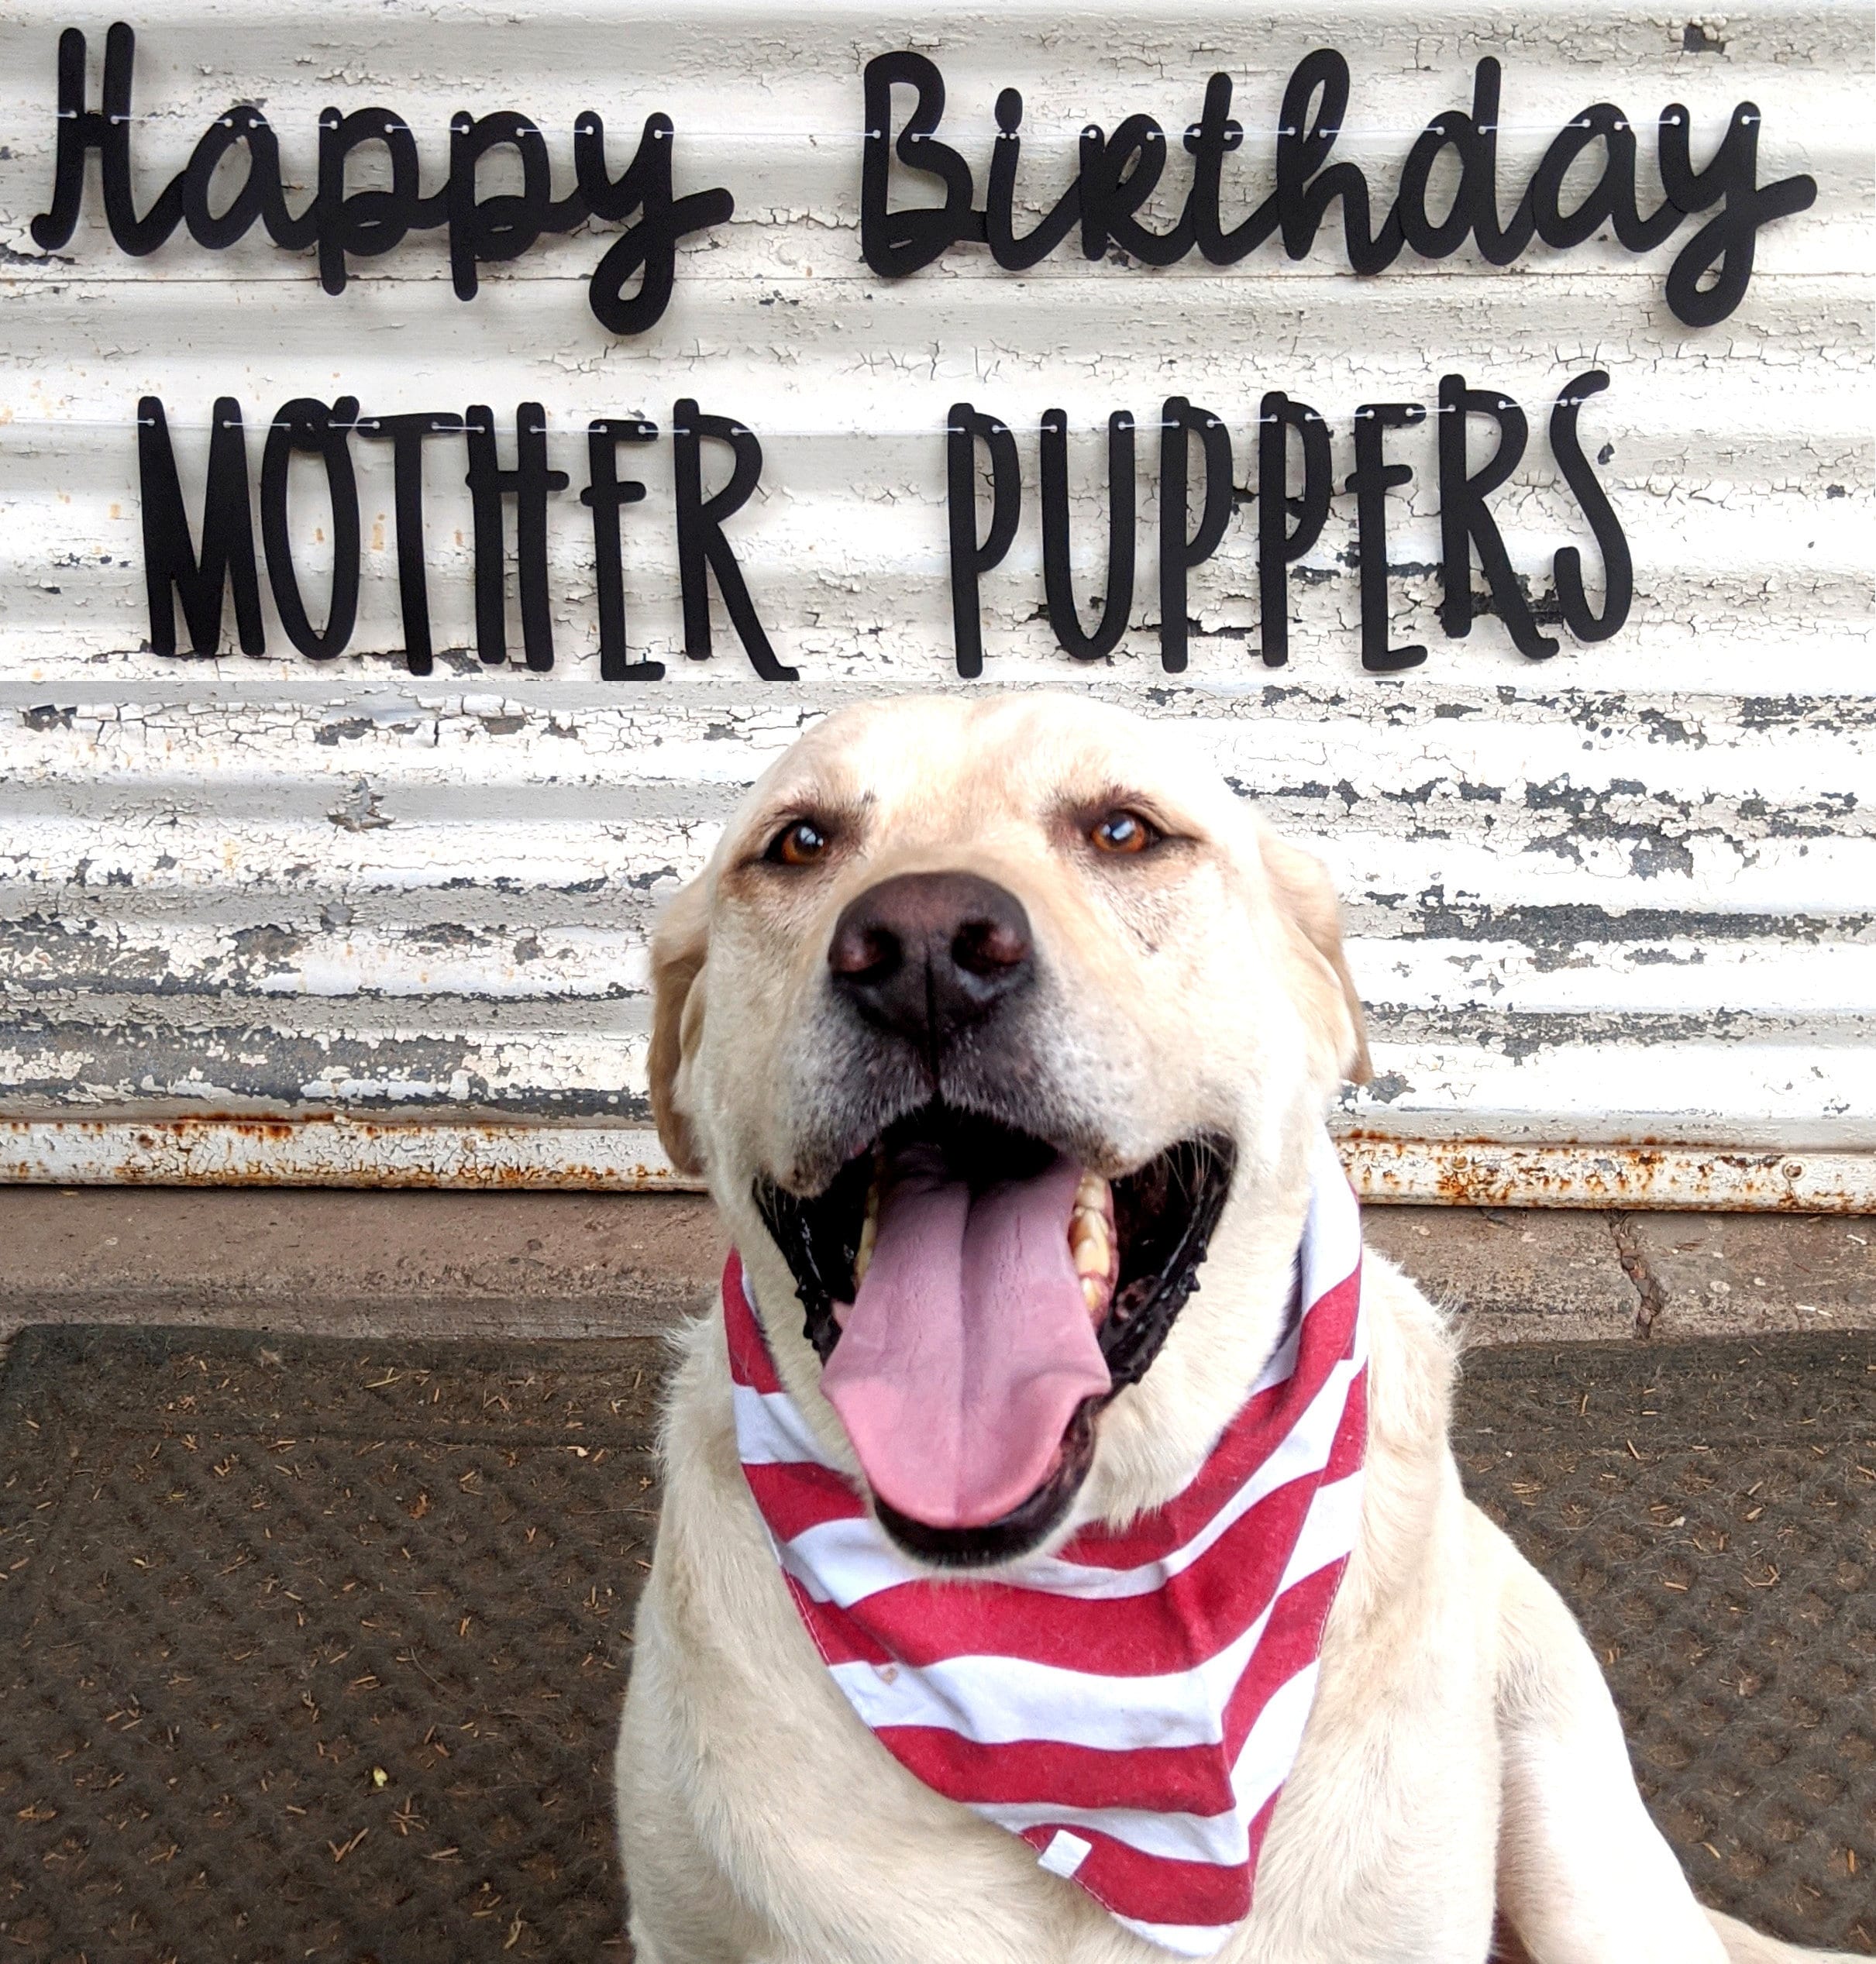 Dog Birthday Party Decor Dog Birthday Banner with Paw Prints Glitter Banner It's My Birthday Motherpuppers